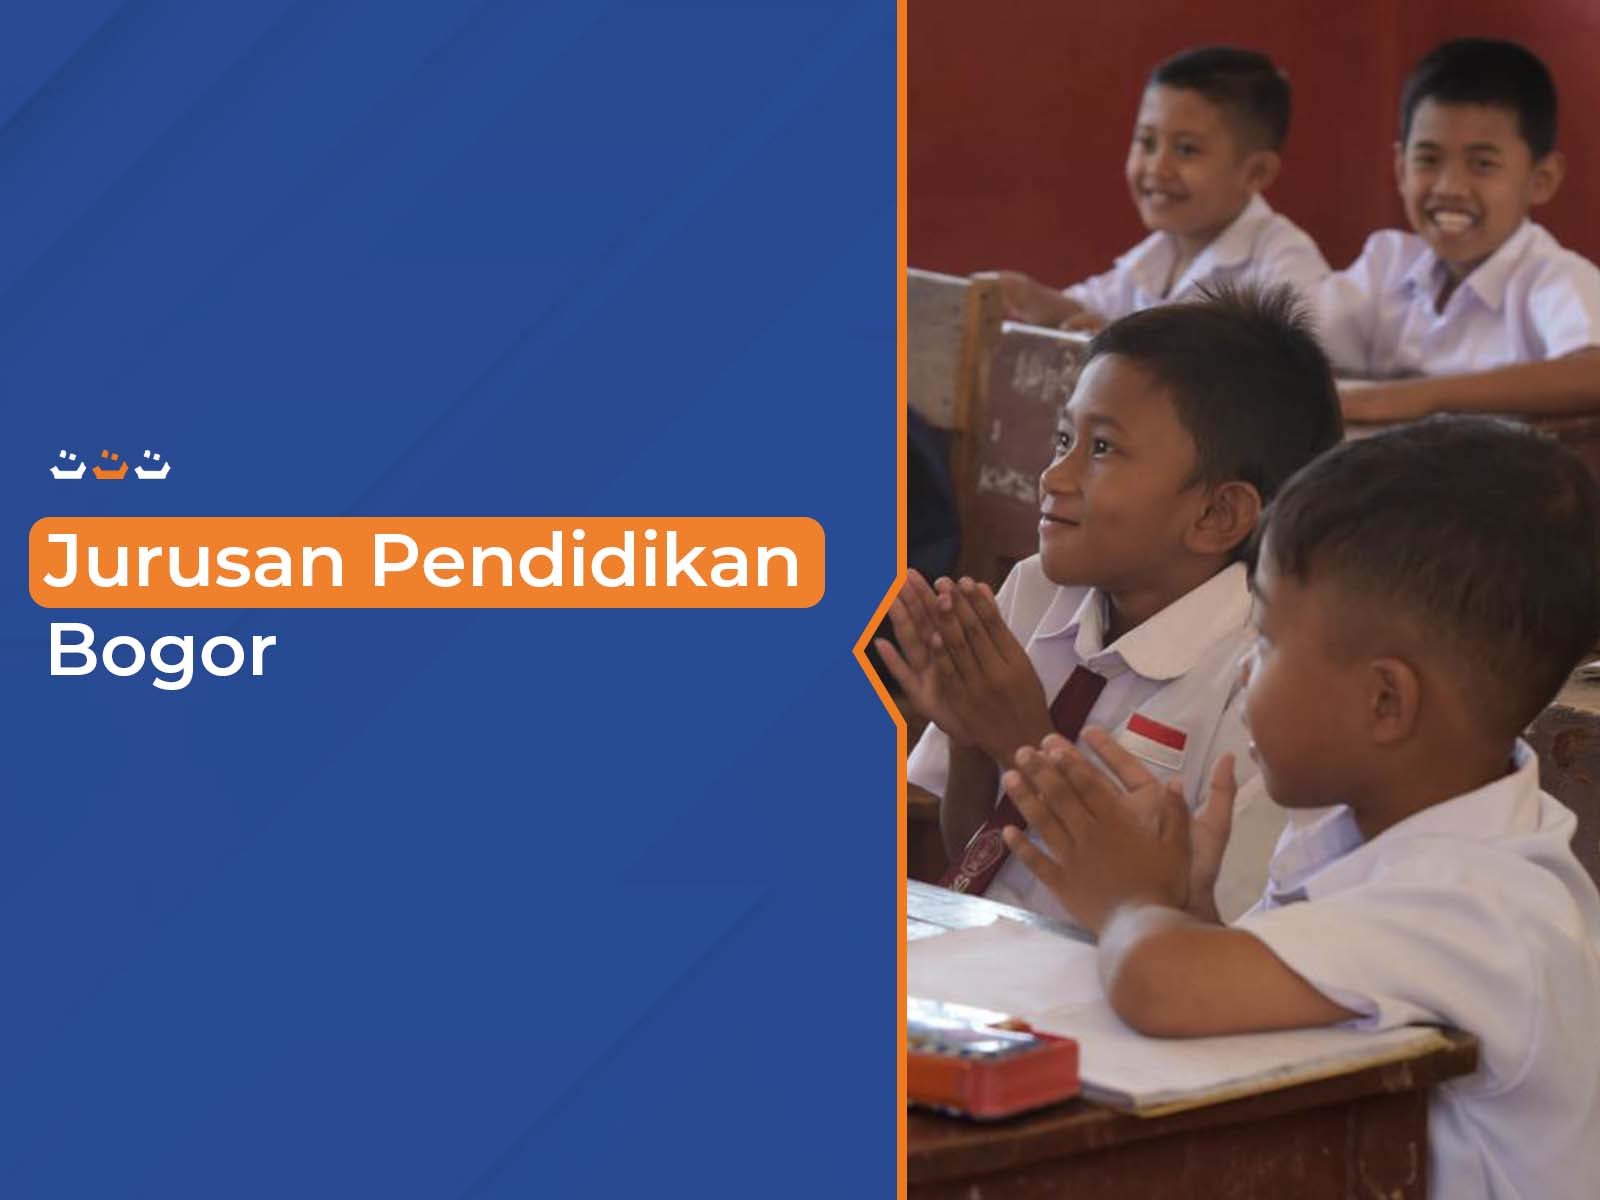 Jurusan Pendidikan Bogor